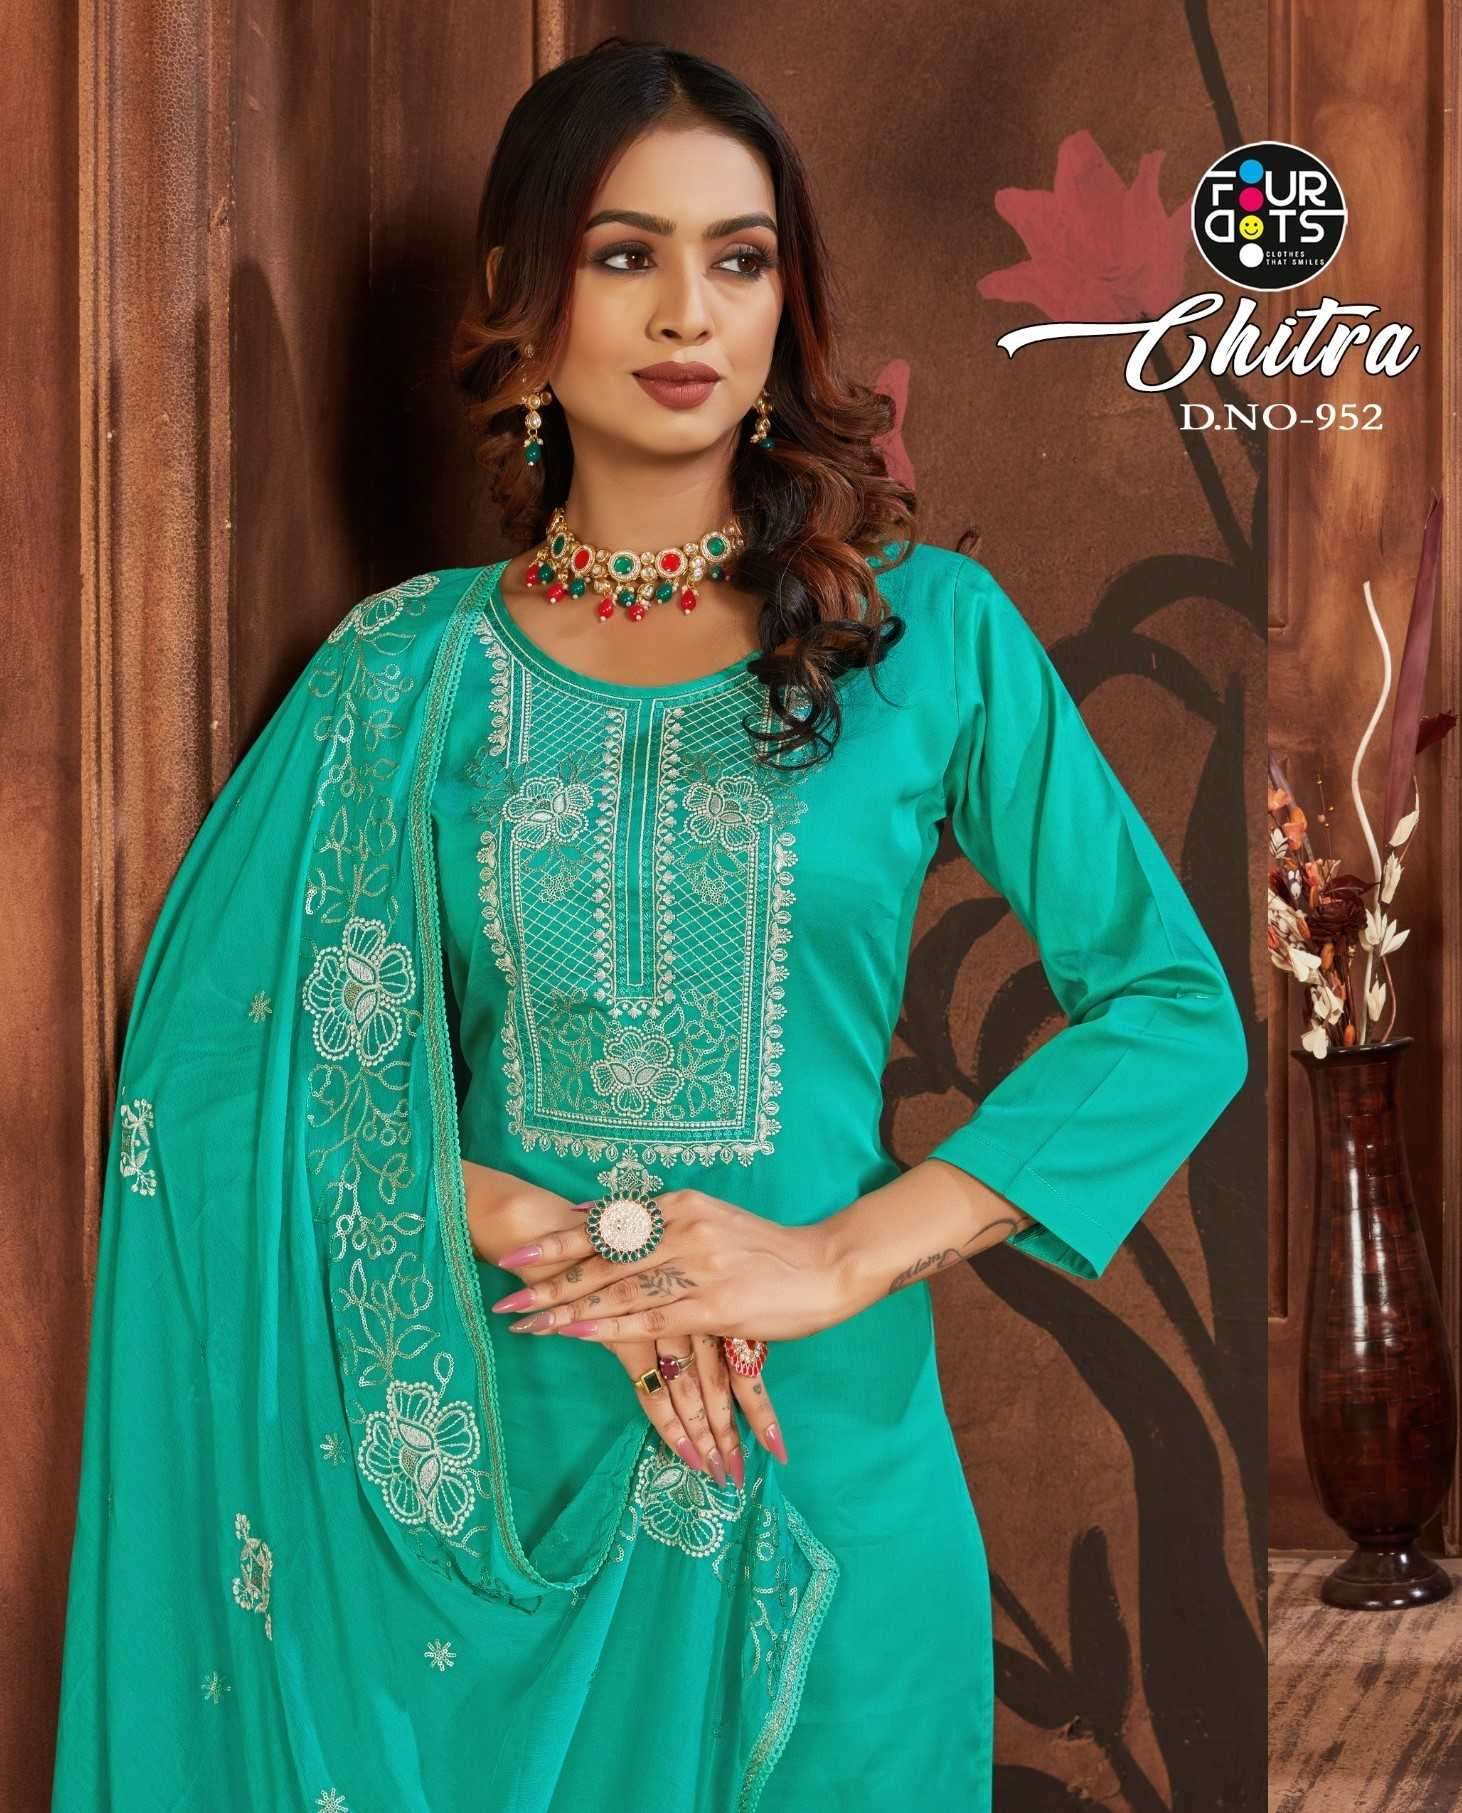 fourdots chitra series 951- 954  Jam Silk Cotton suit